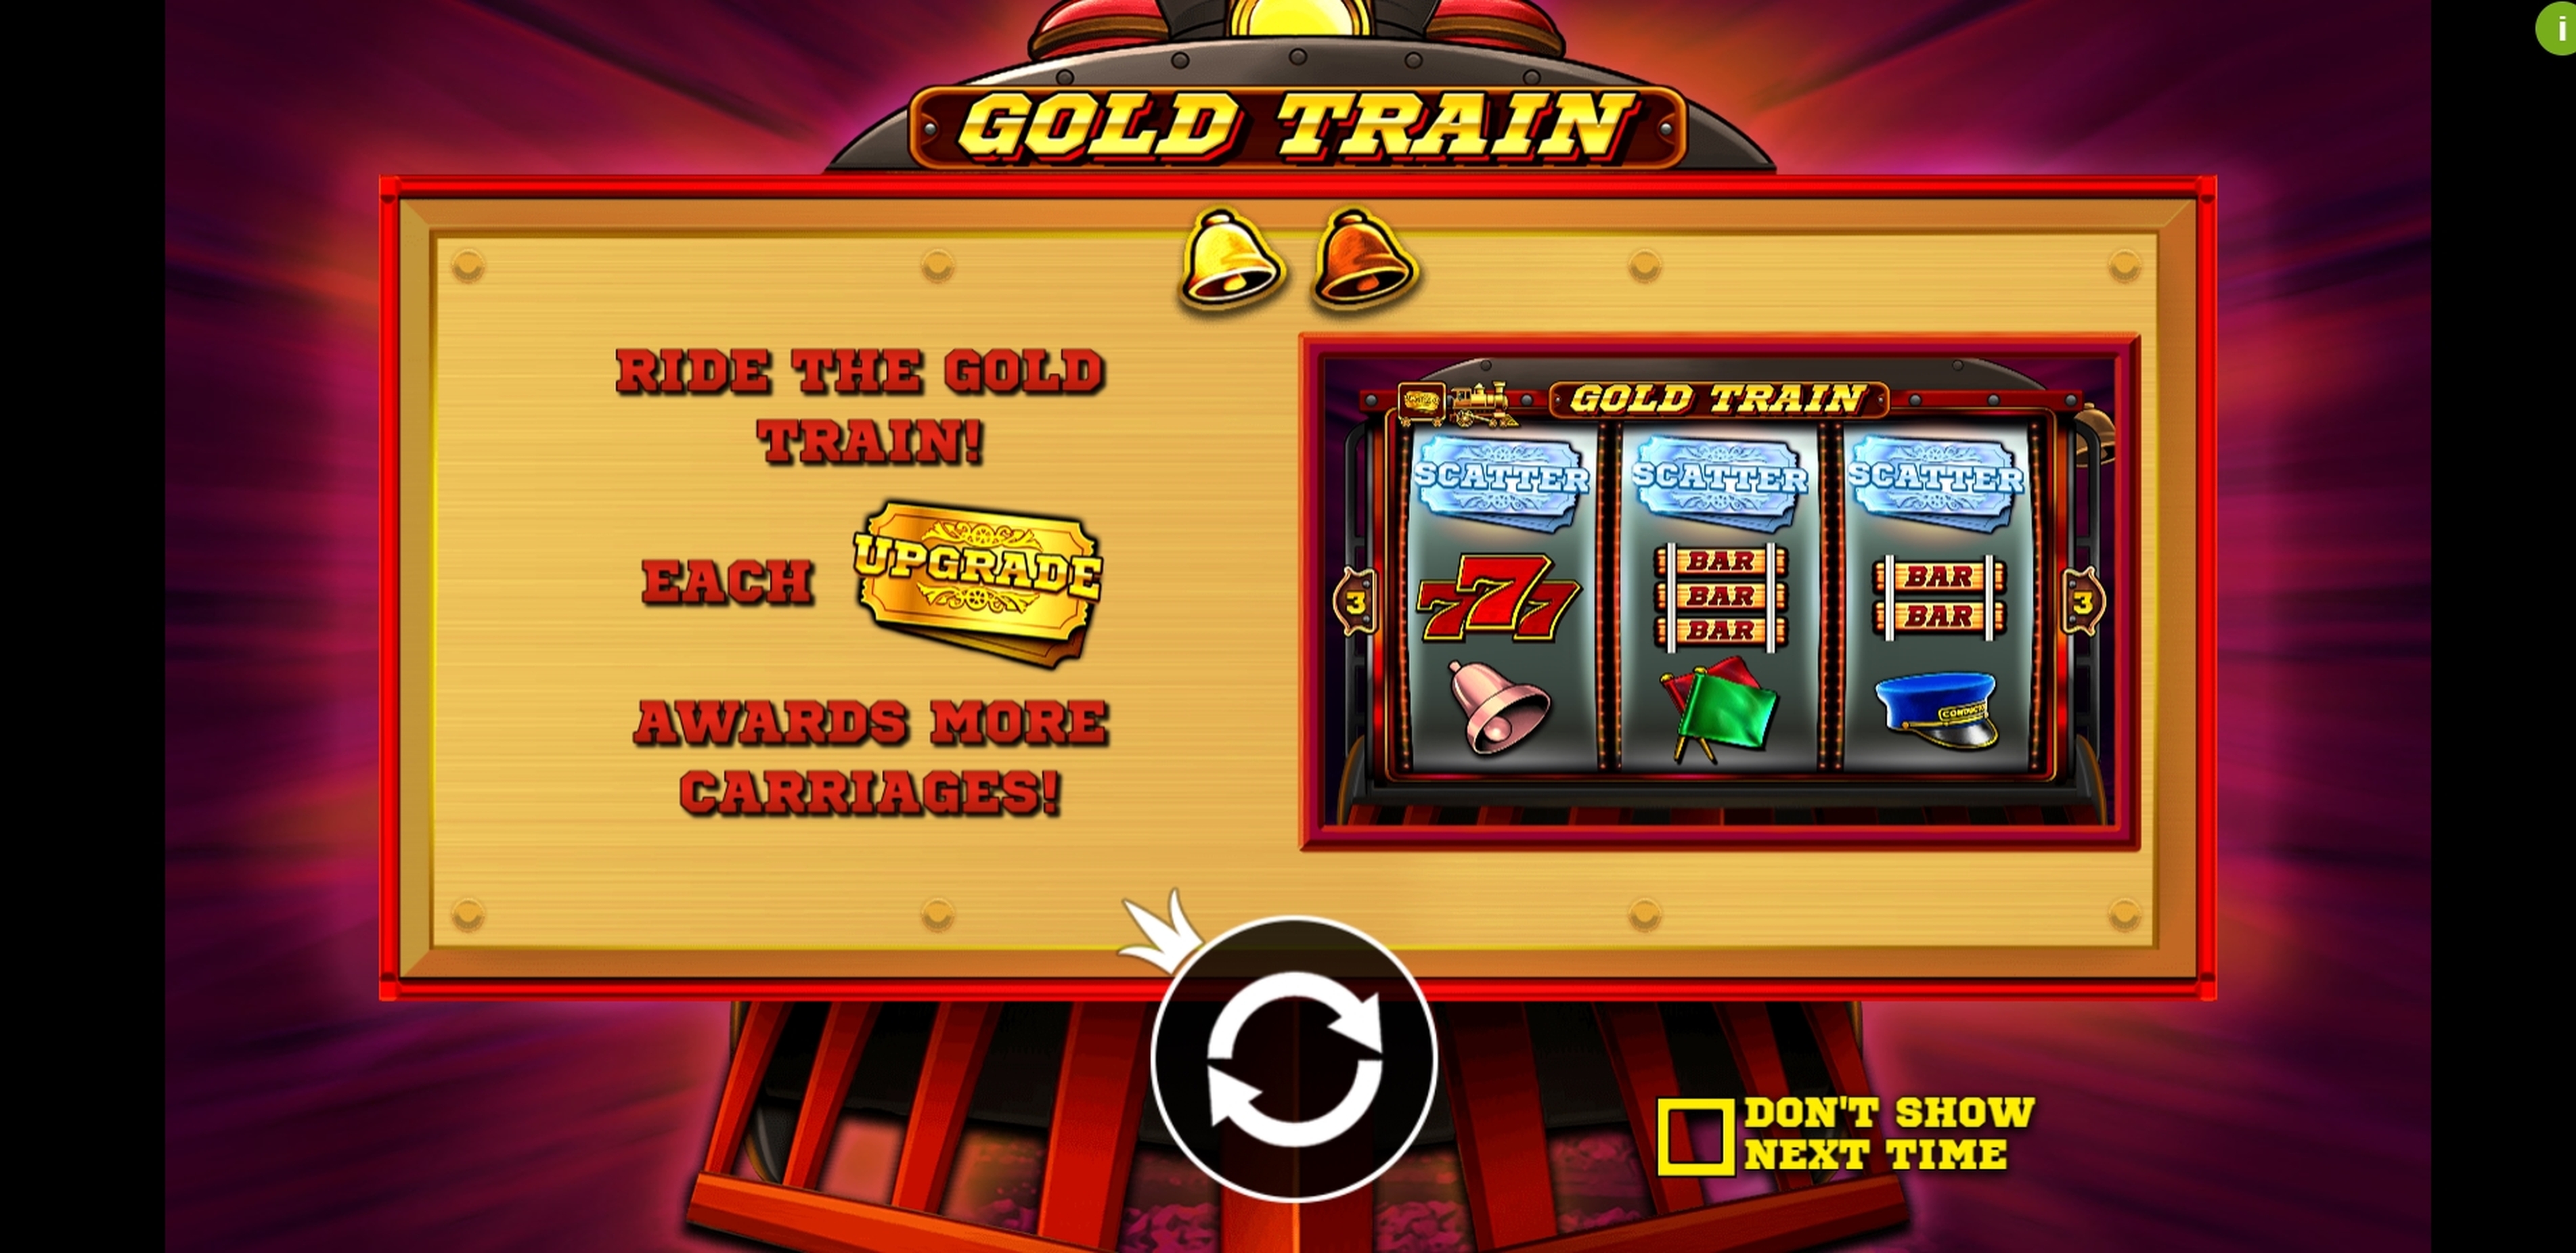 Play Gold Train Free Casino Slot Game by Pragmatic Play